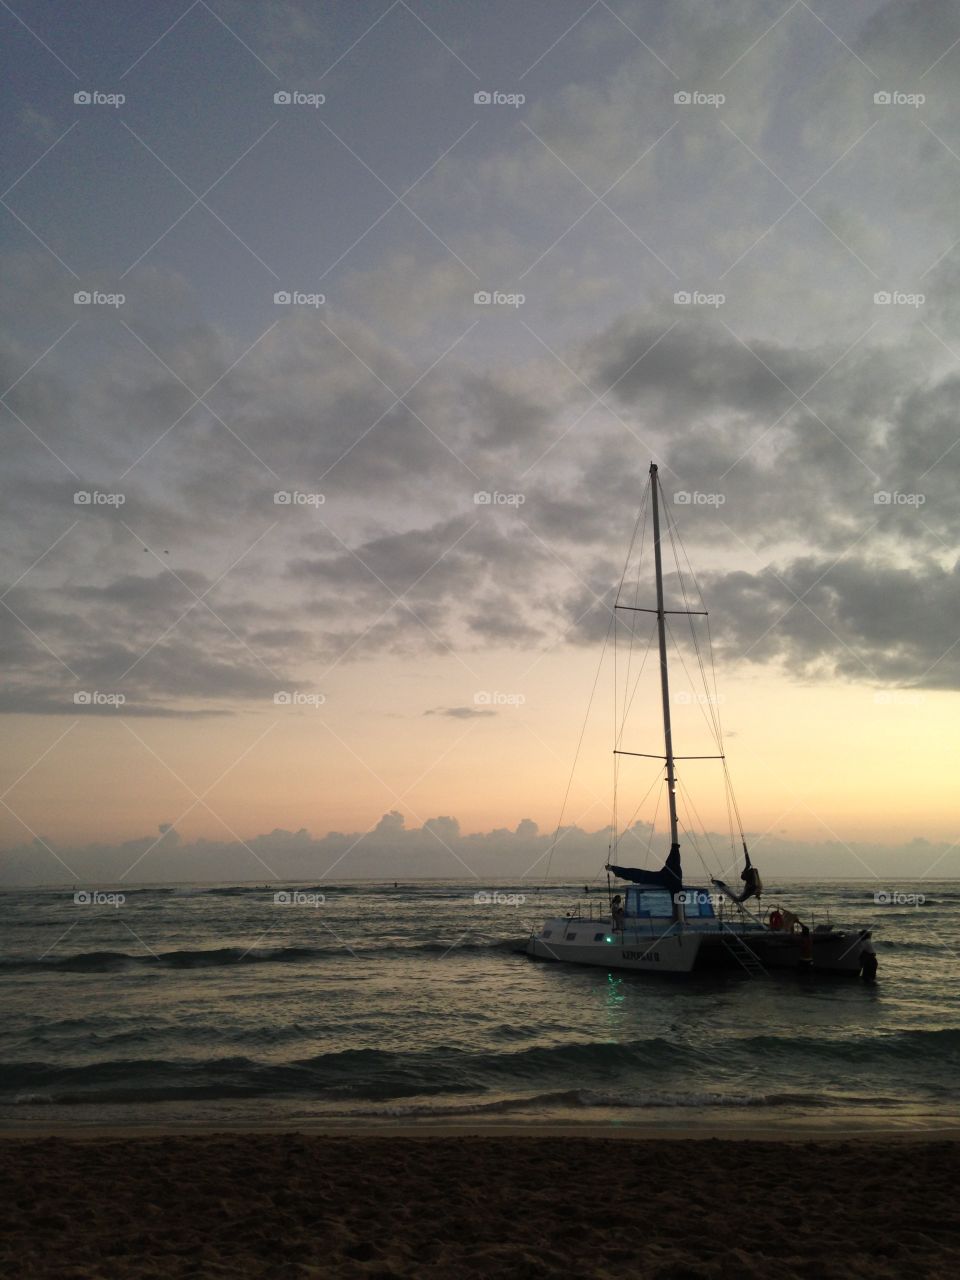 we set sail at sunset 